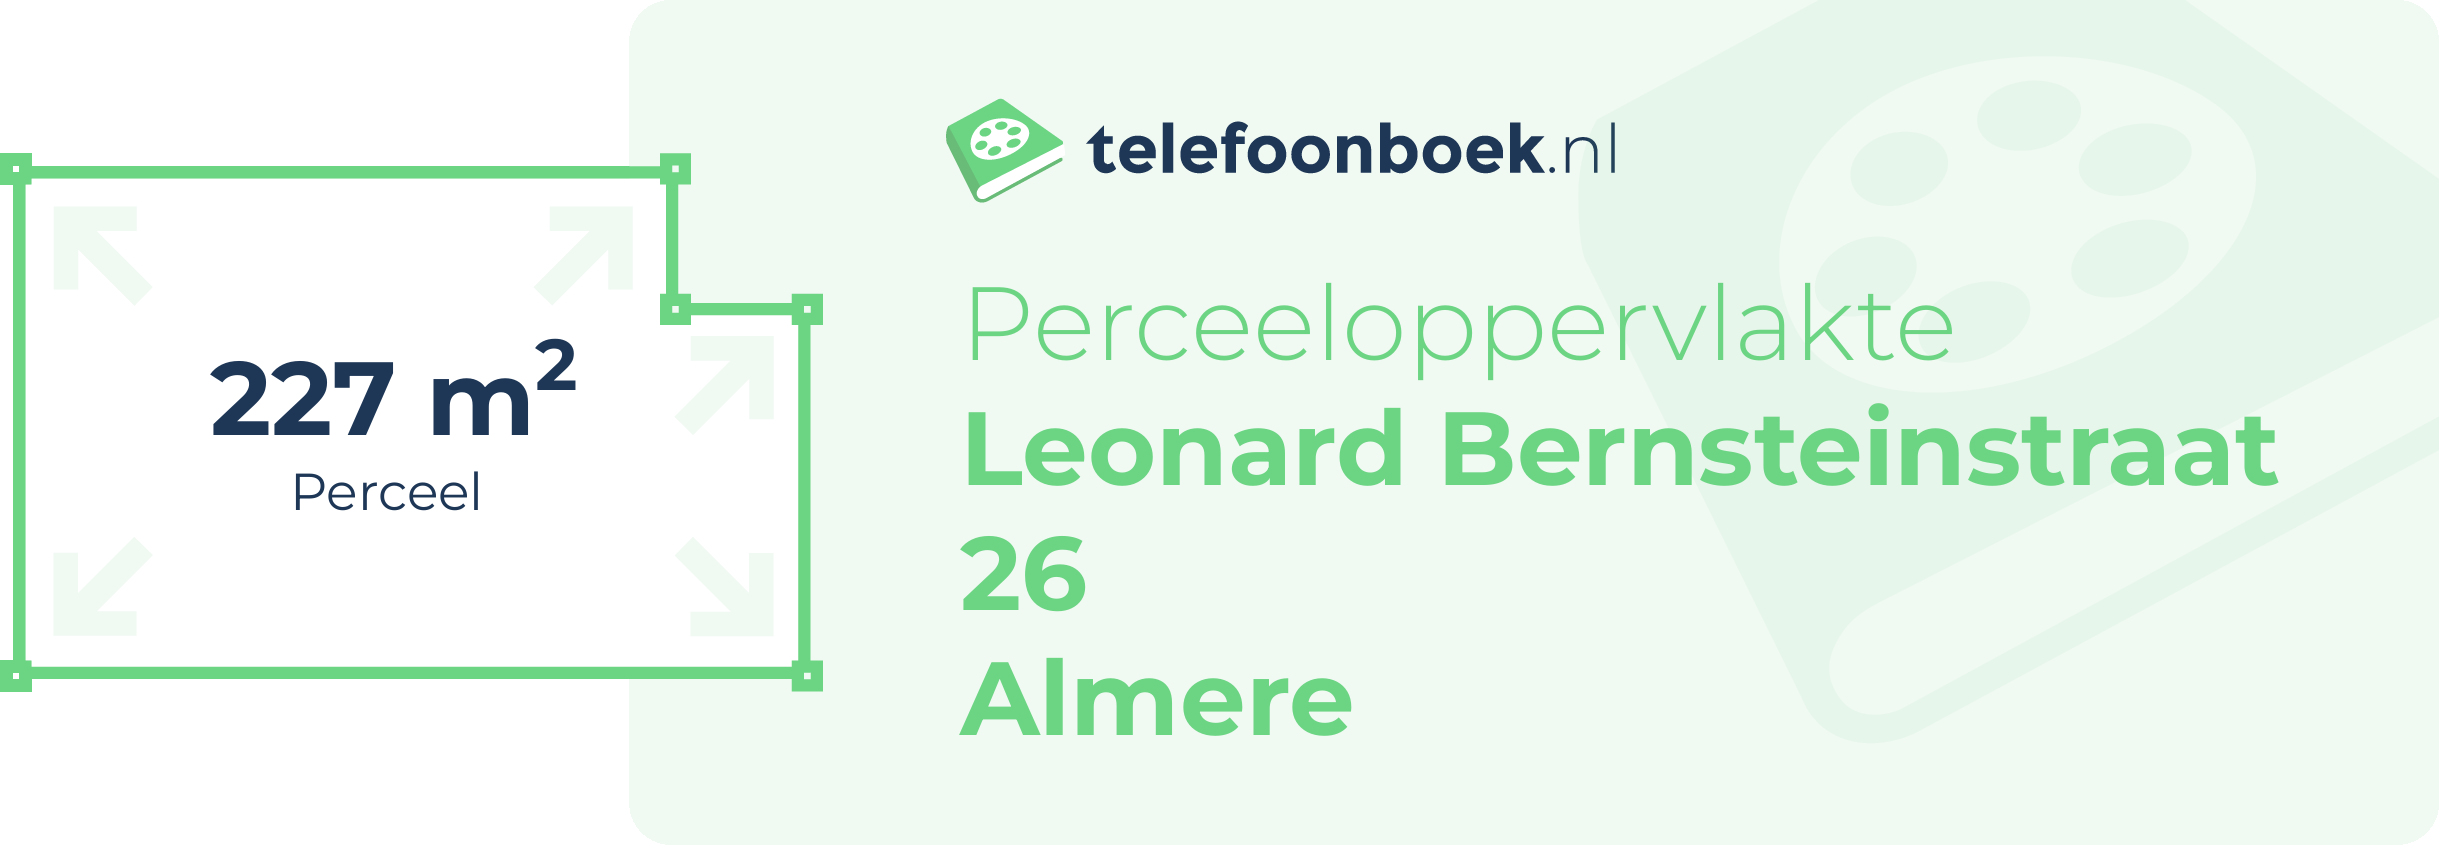 Perceeloppervlakte Leonard Bernsteinstraat 26 Almere